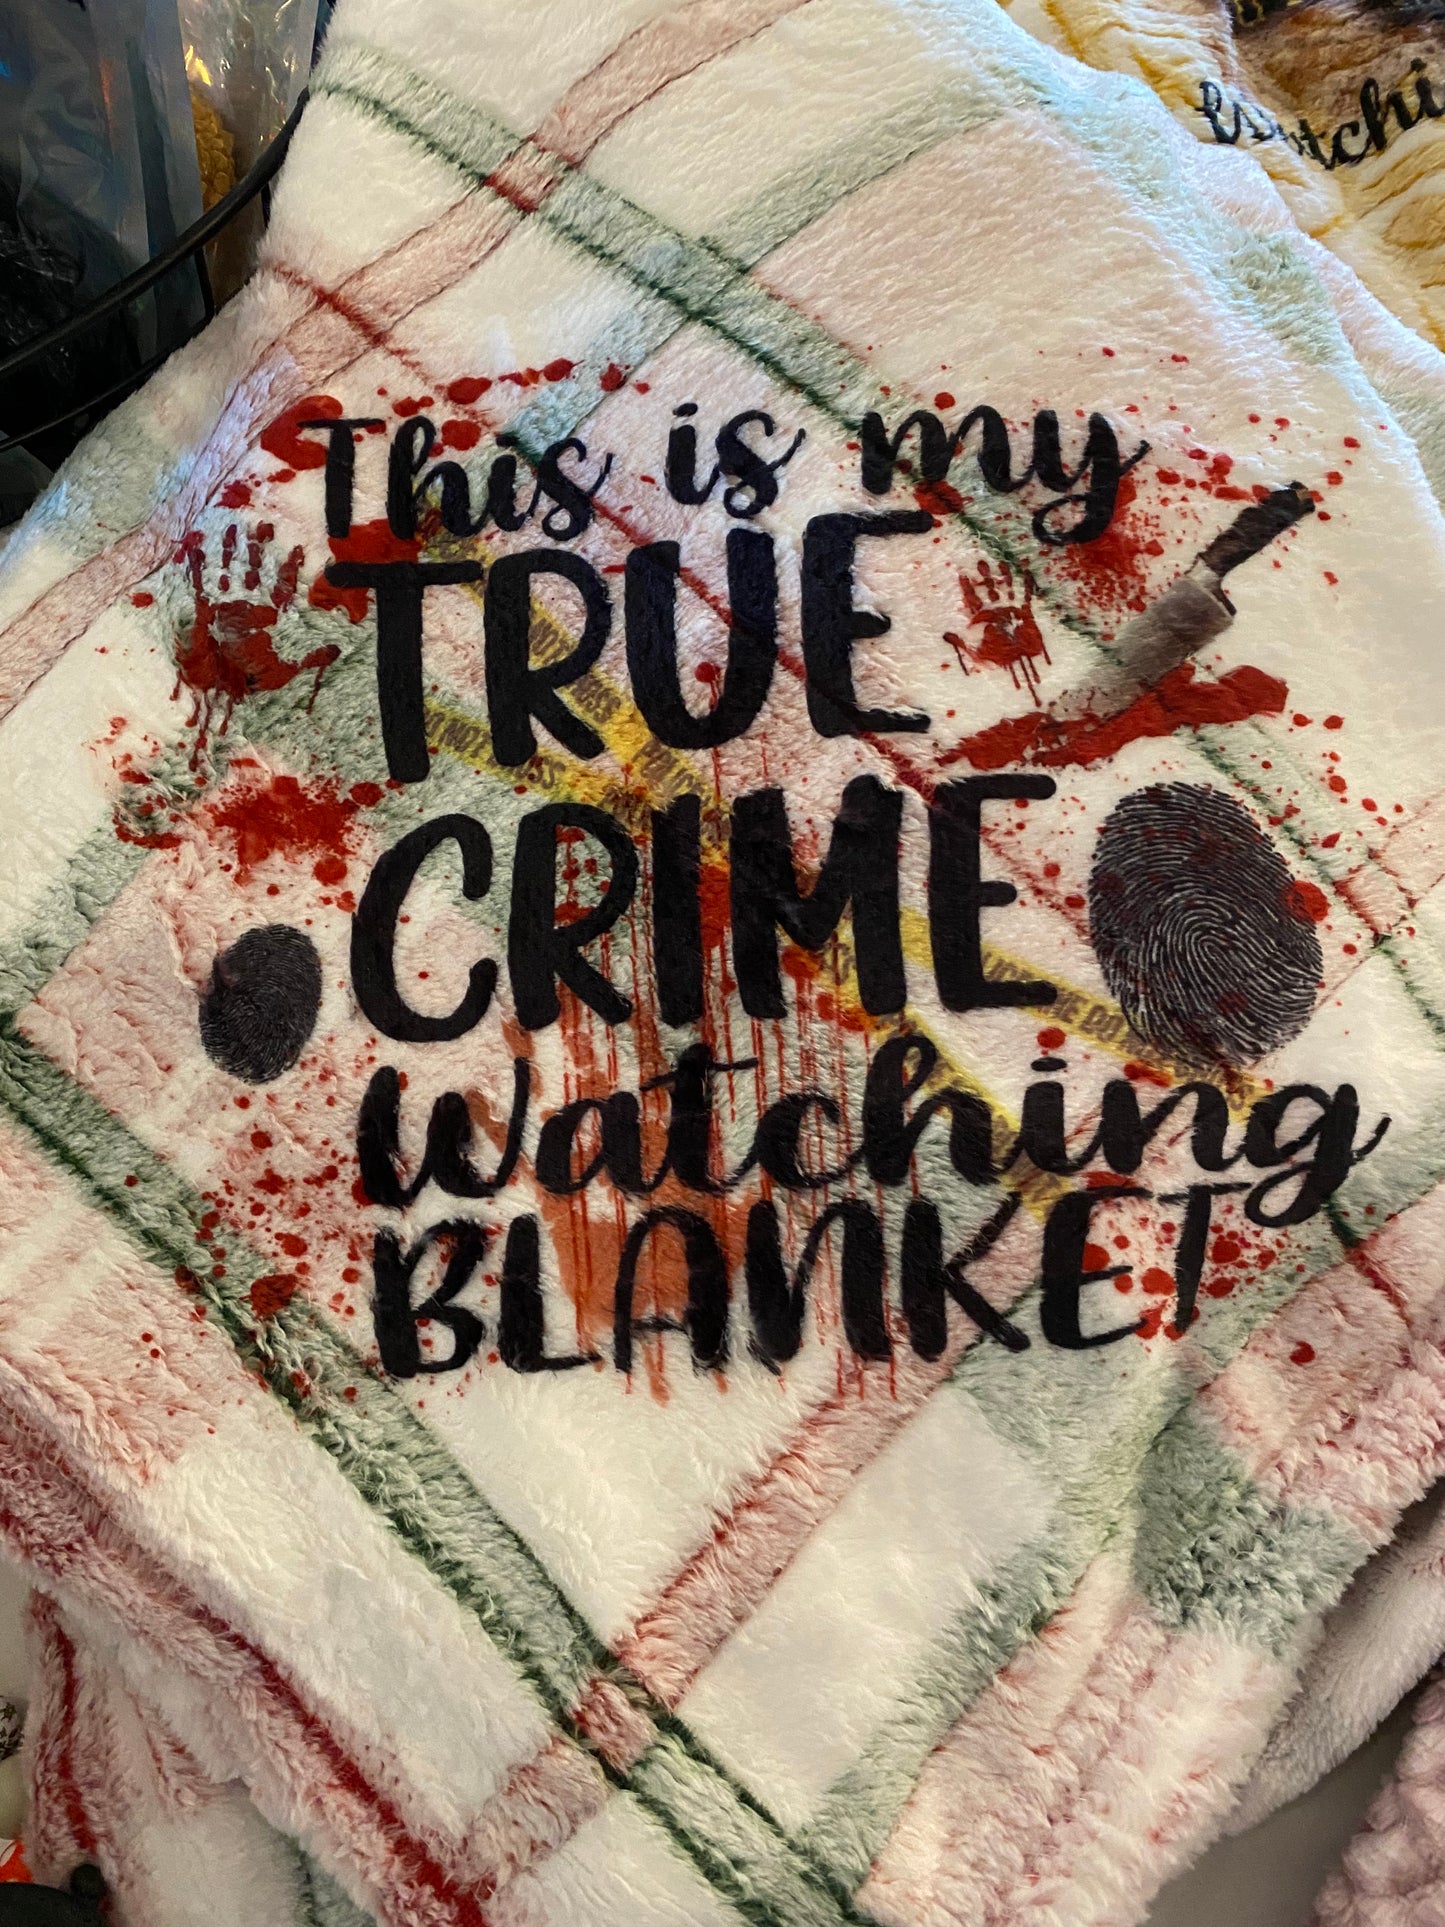 Printed Blankets